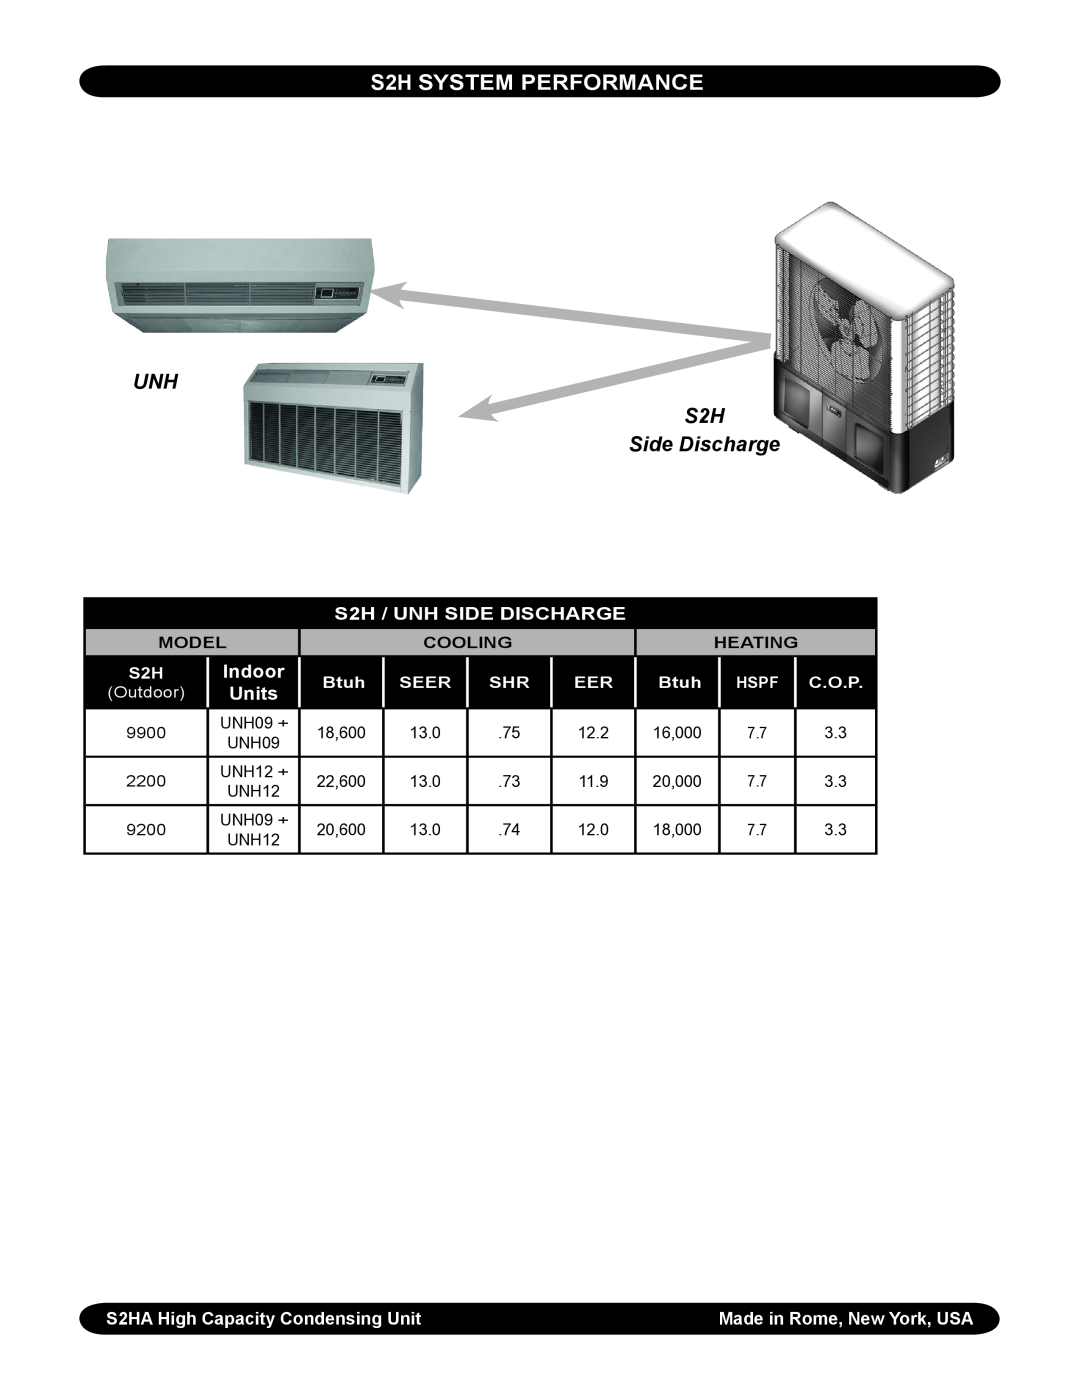 EMI S2H System Performance, UNH S2H Side Discharge, S2H / UNH Side discharge, S2HA High Capacity Condensing Unit, Model 